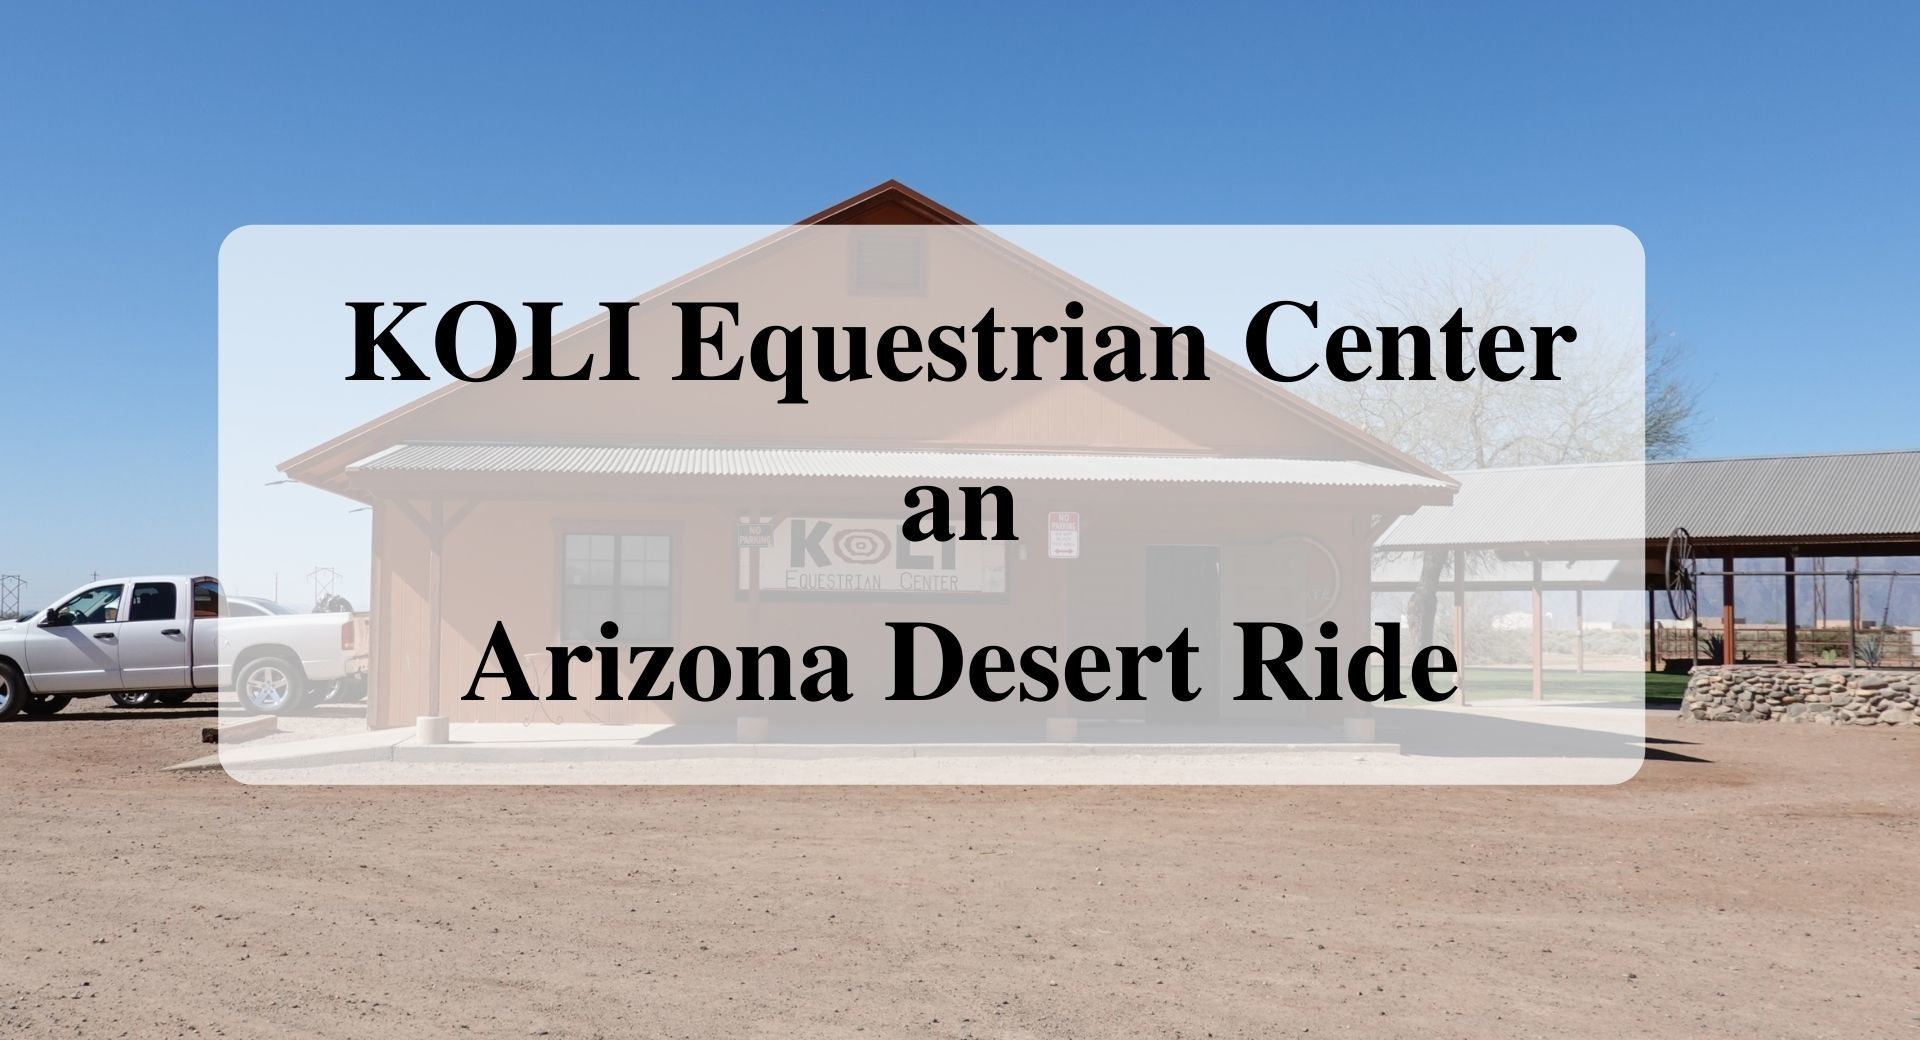 KOLI Equestrian Center an Arizona Desert Ride